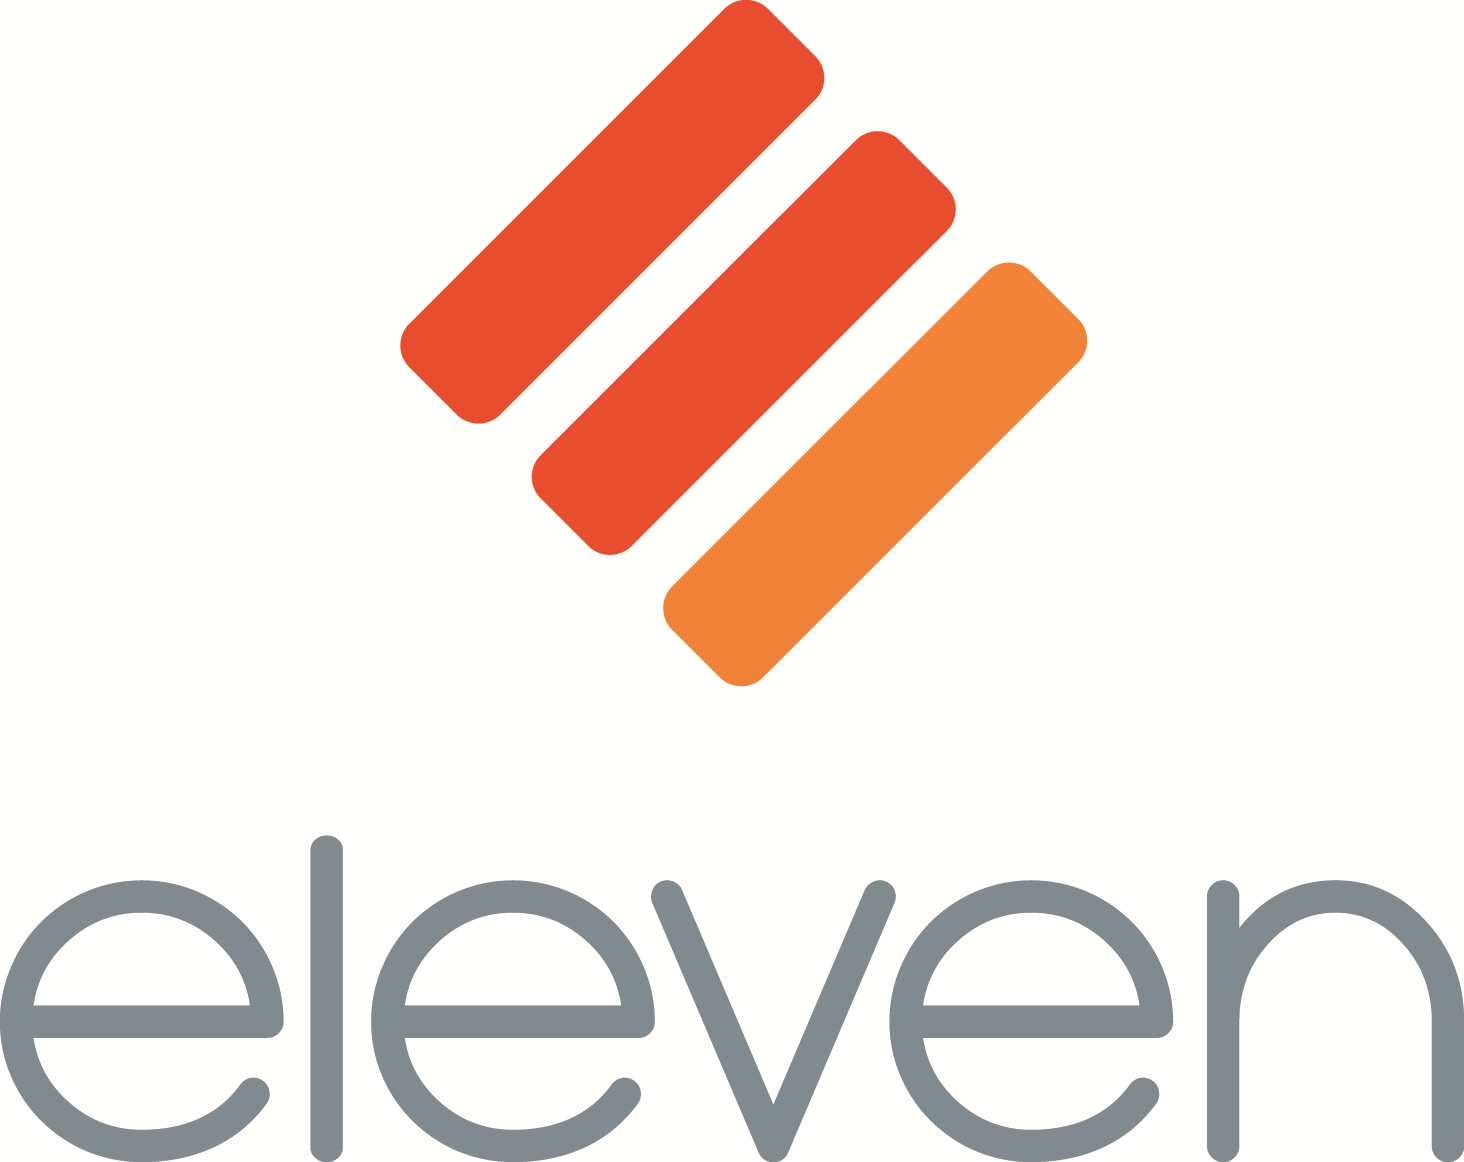 Eleven Software logo